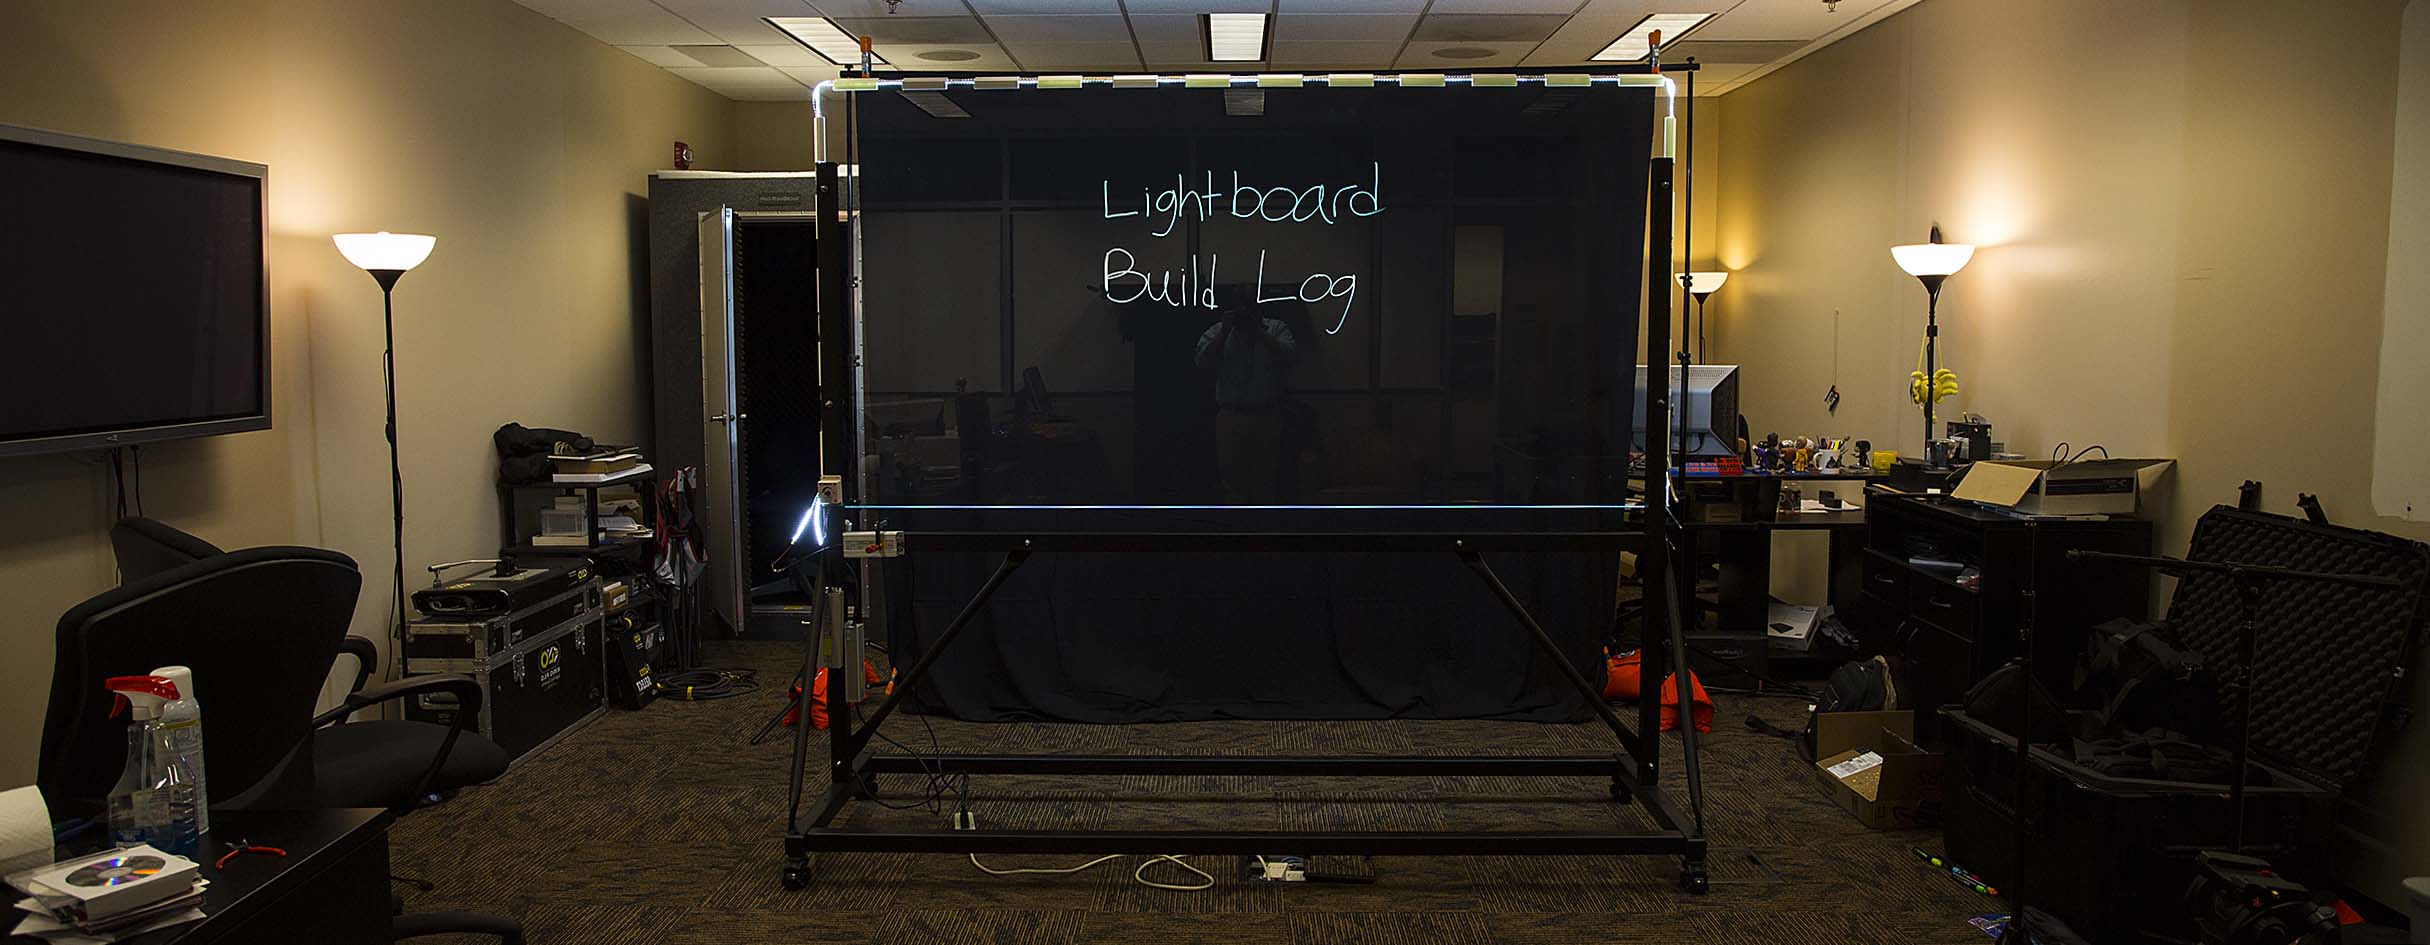 Lightboard Build Log - Clayton State University